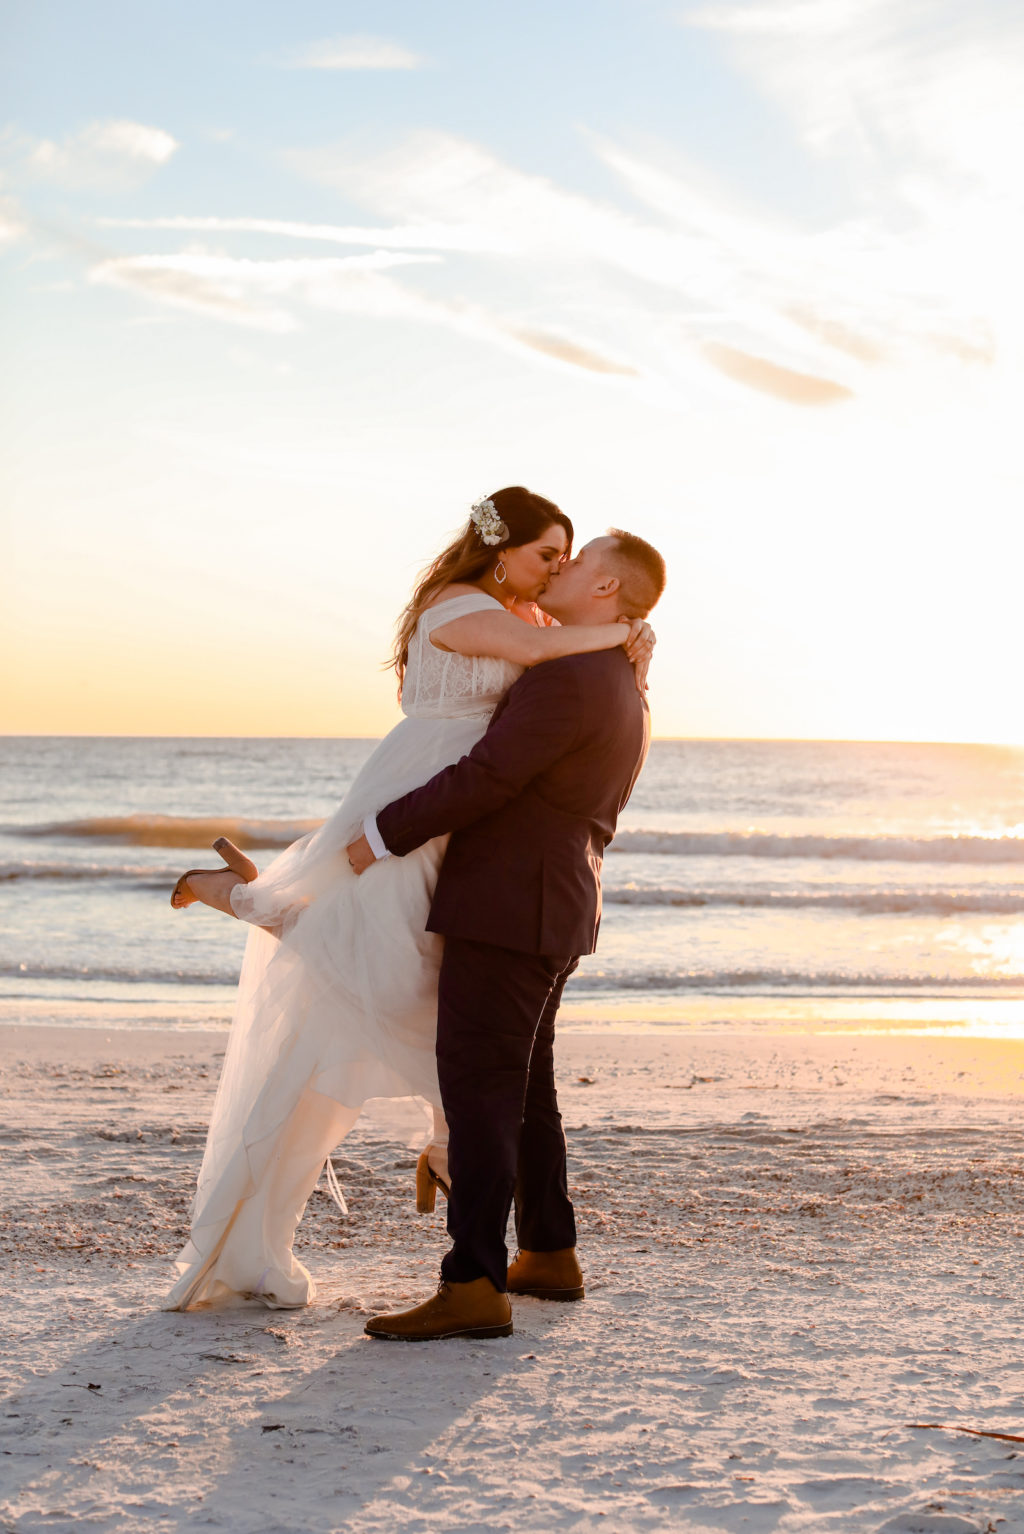 Romantic Sunset Photo of Groom Holding Bride and Kissing on the Beach | St. Pete Beach Wedding Venue Postcard Inn | Tampa Wedding Photographer Lifelong Photography Studio